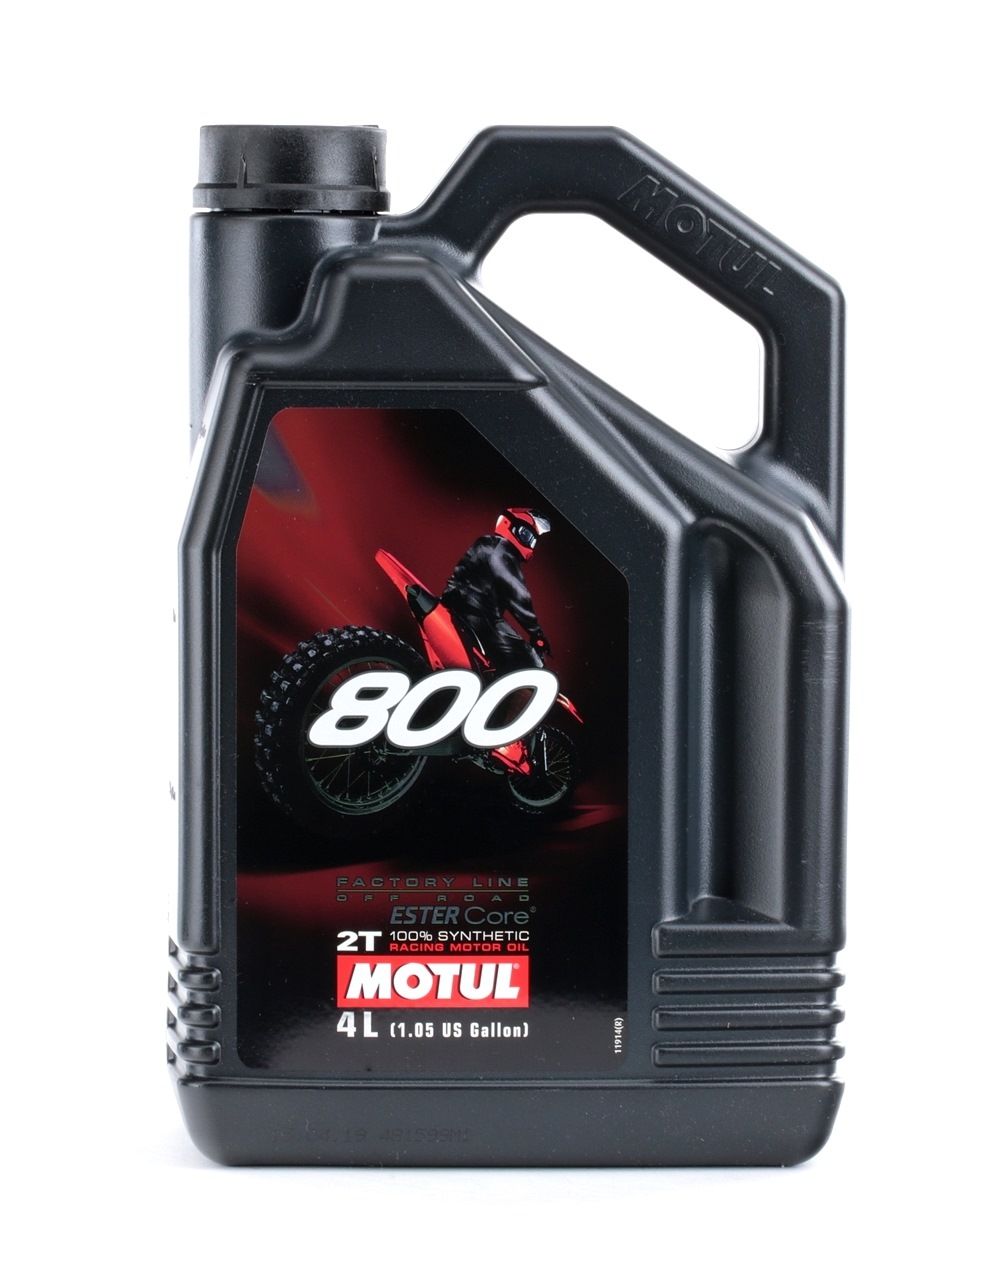 MOTUL 2T FL OFF ROAD 4L, Synthetische olie Olie 104039 koop goedkoop